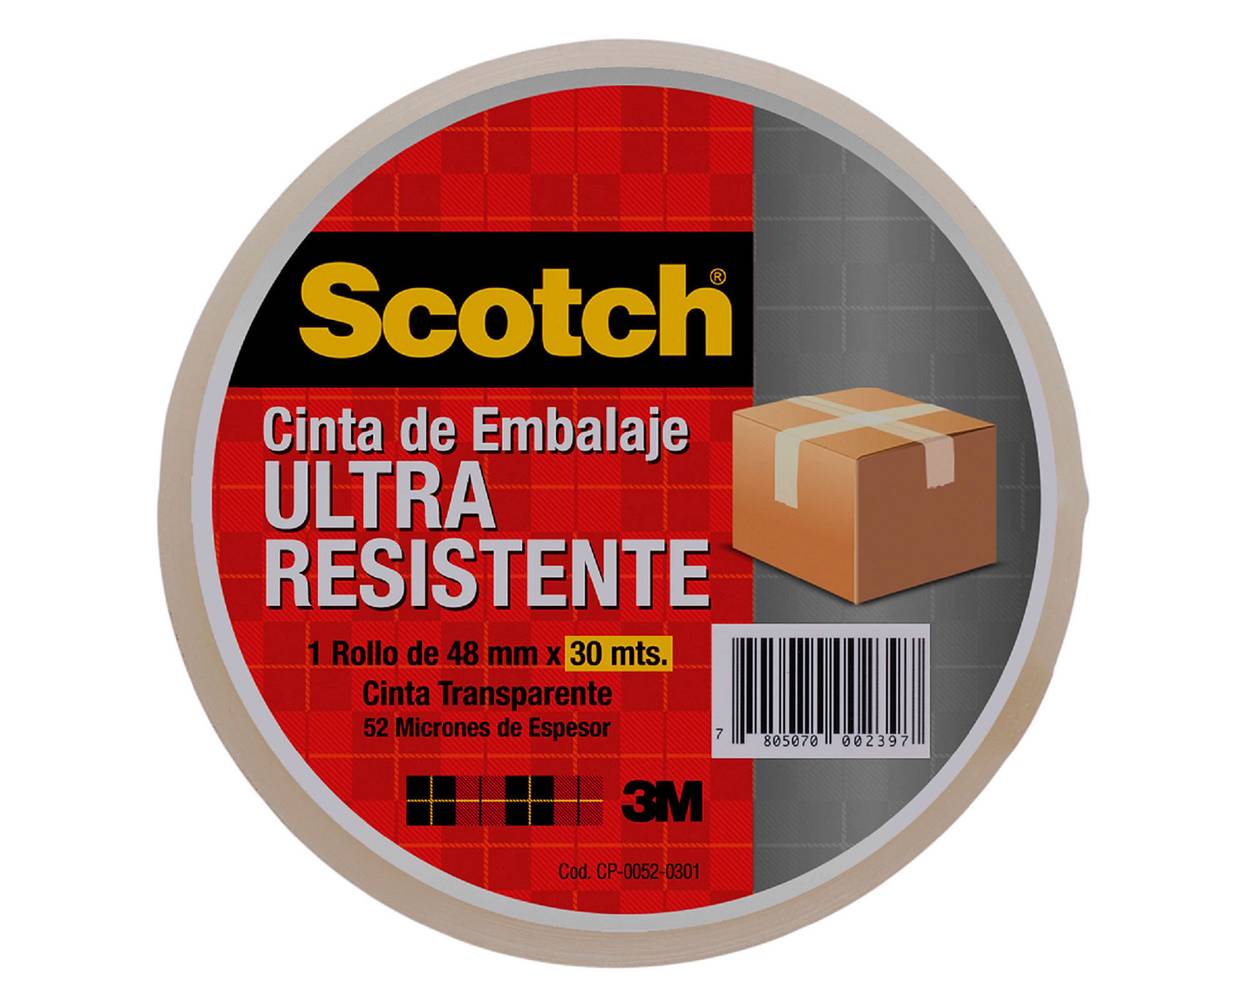 Scotch cinta ultra resistente (1 un)